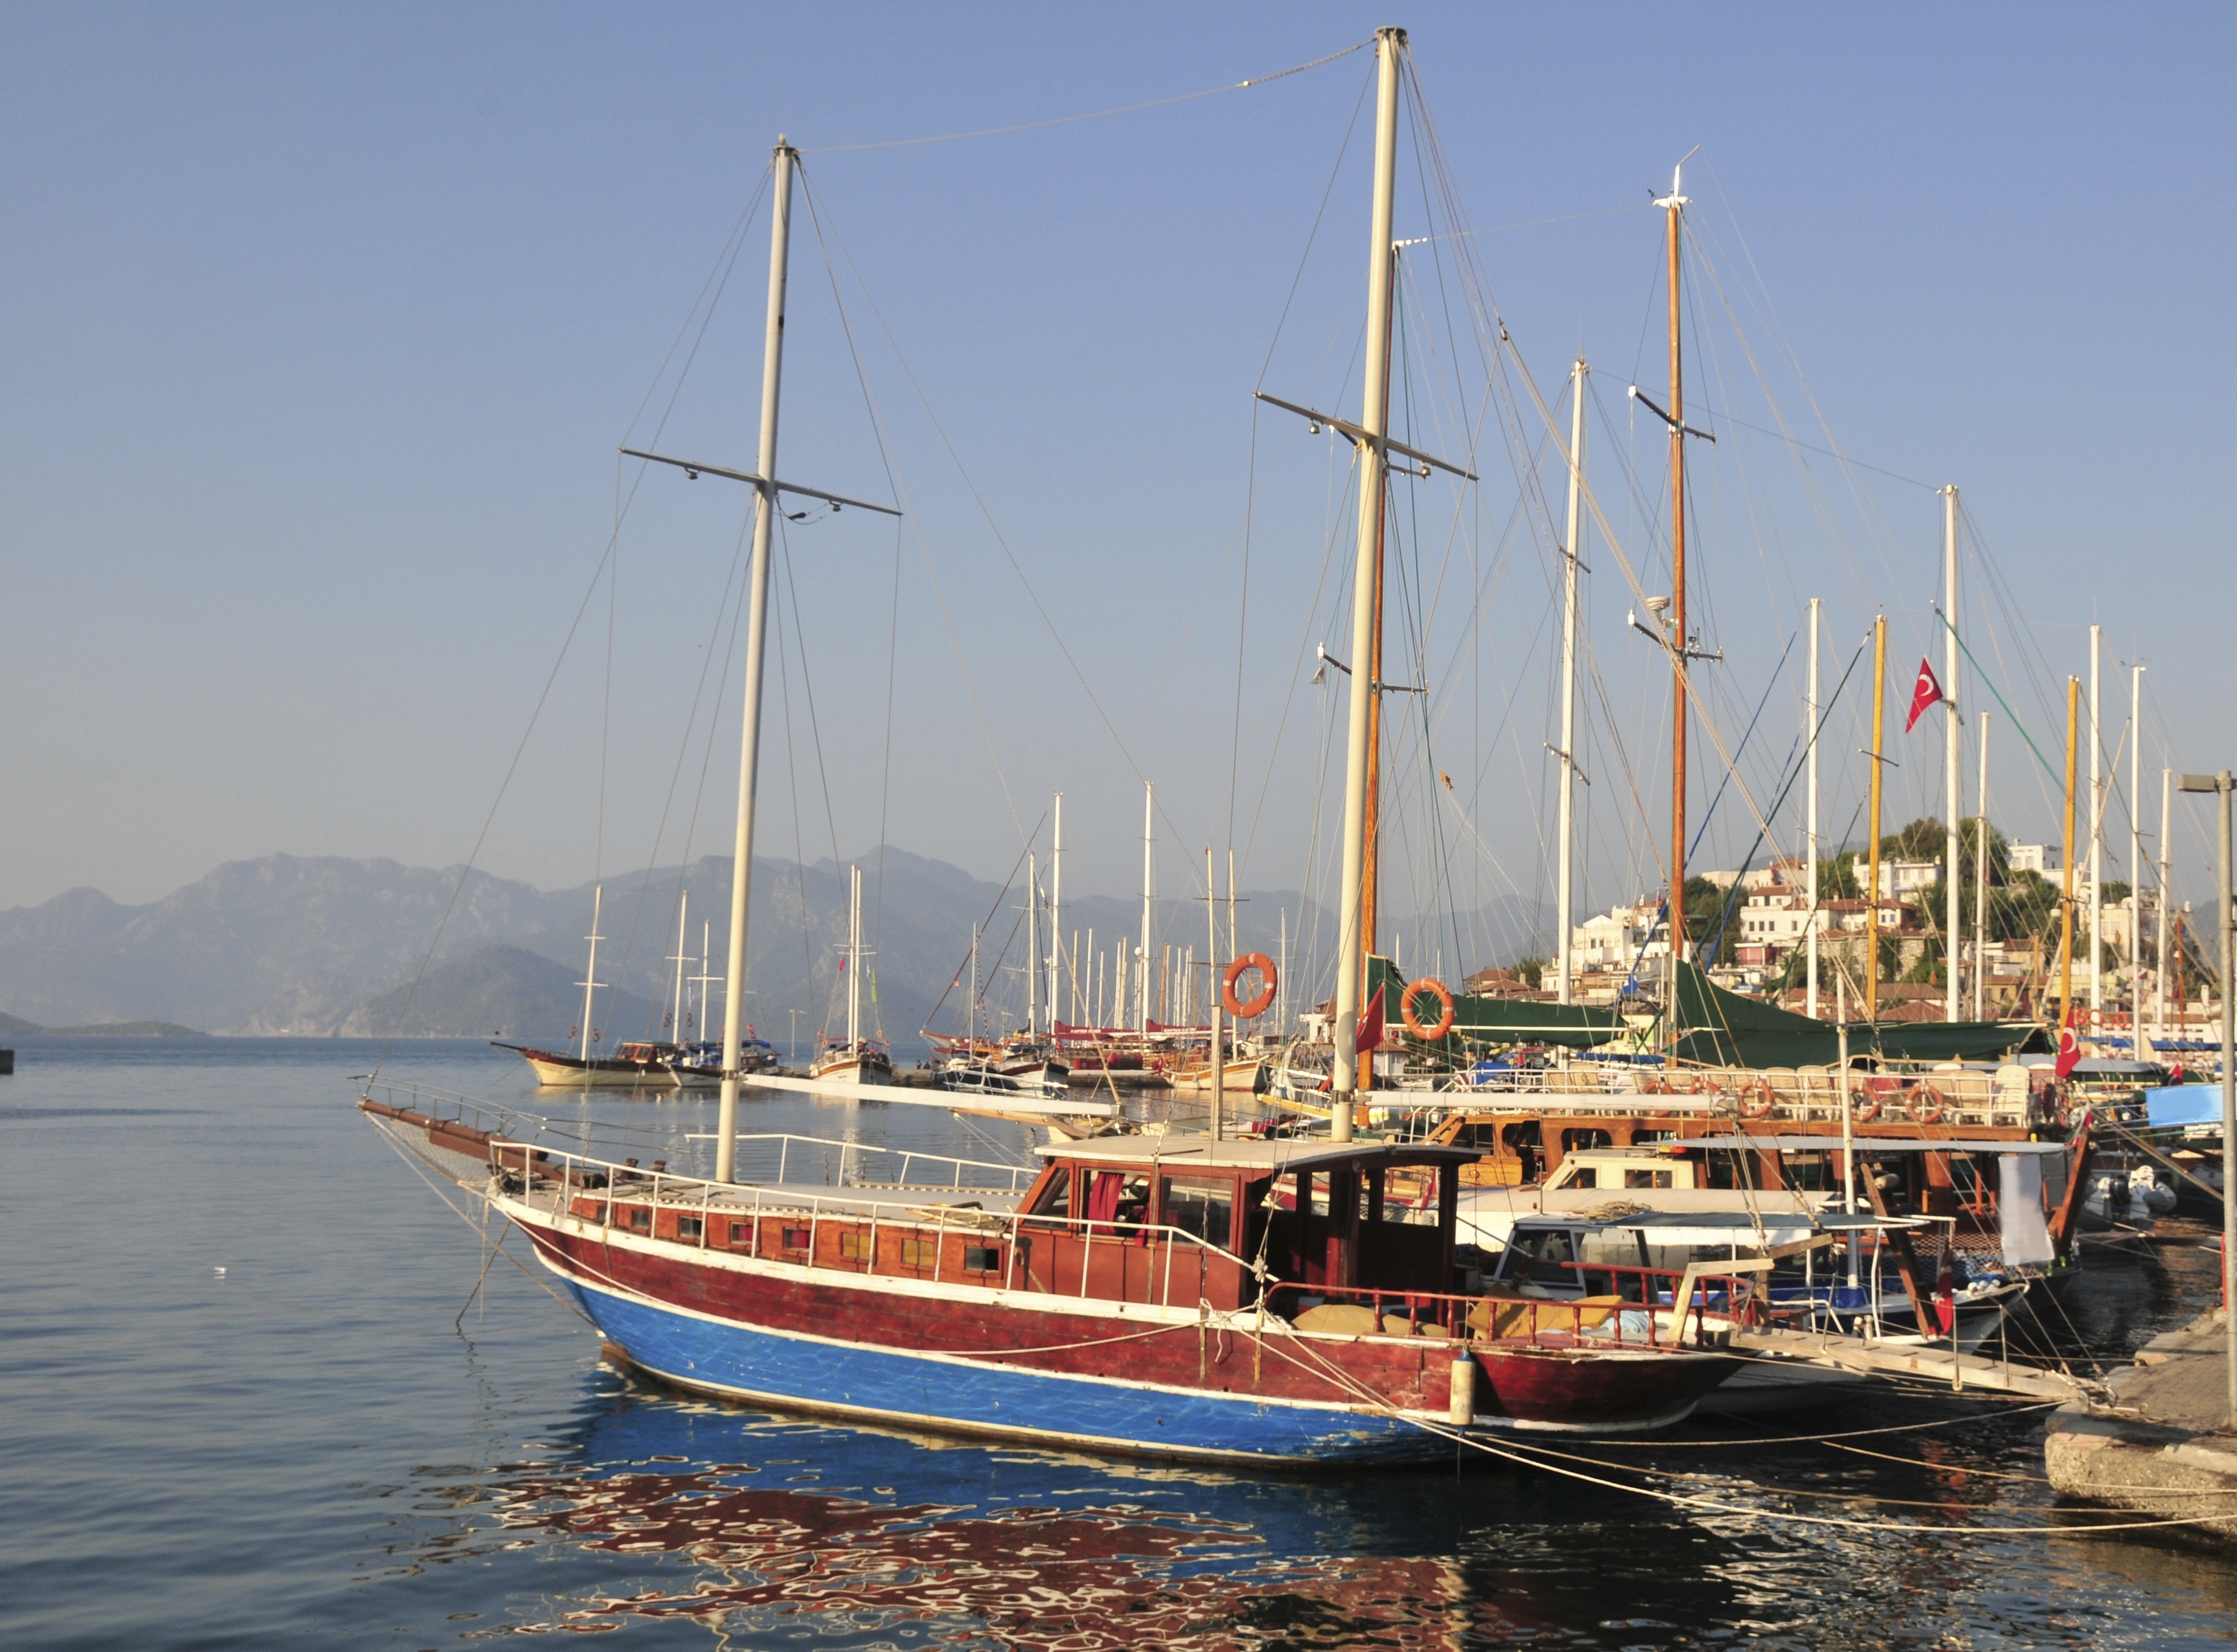 Gulet boat cruises are popular in Turkey